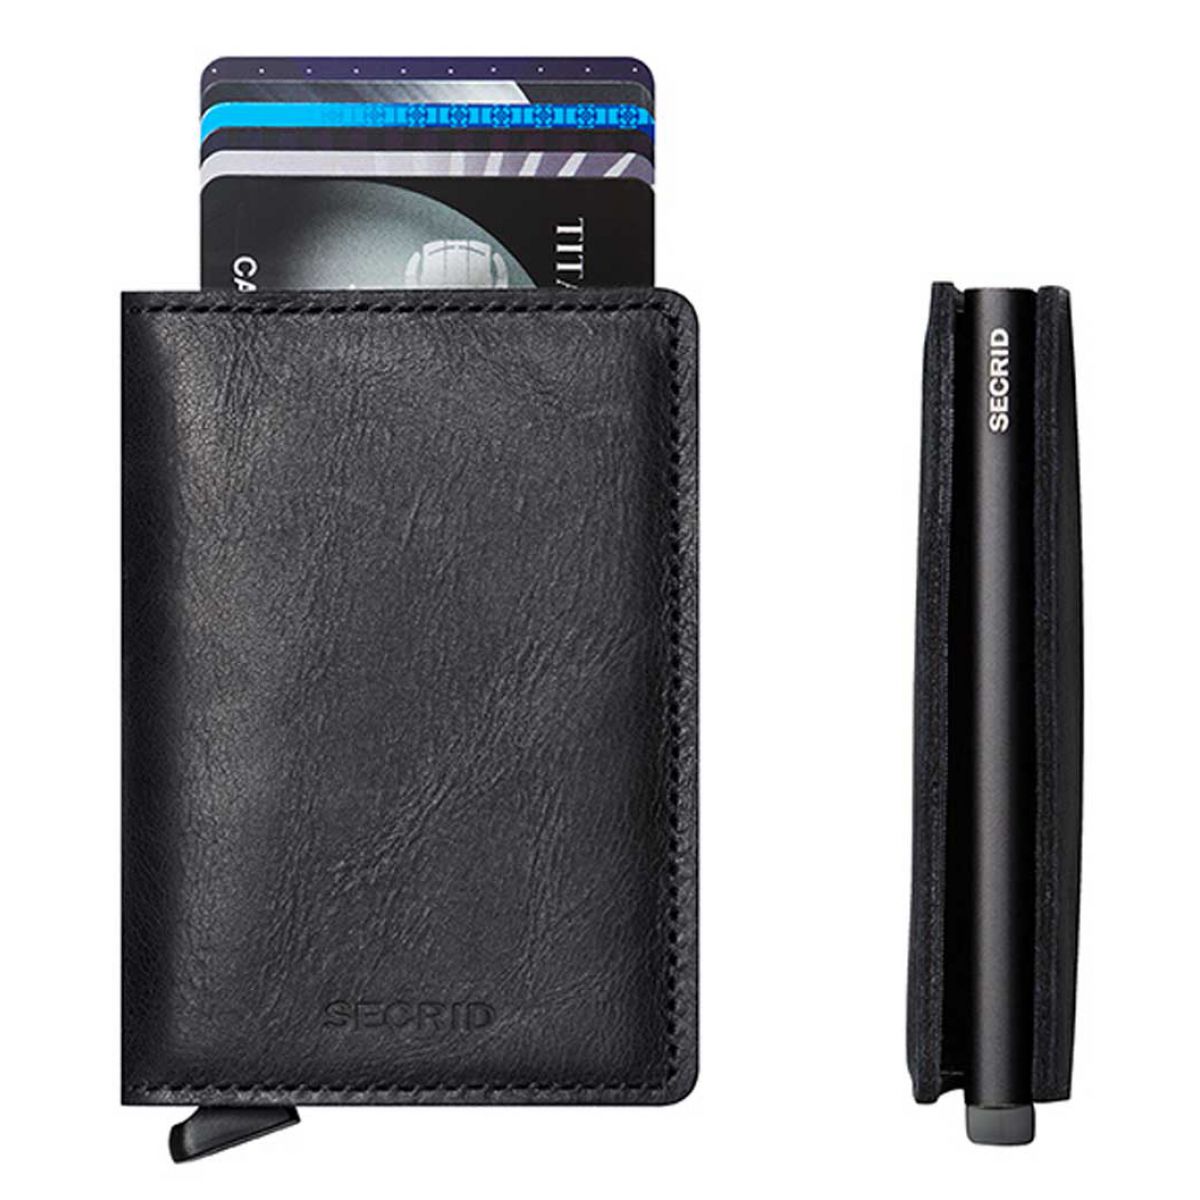 Secrid slim wallet leather vintage black- SECRID - product code ...